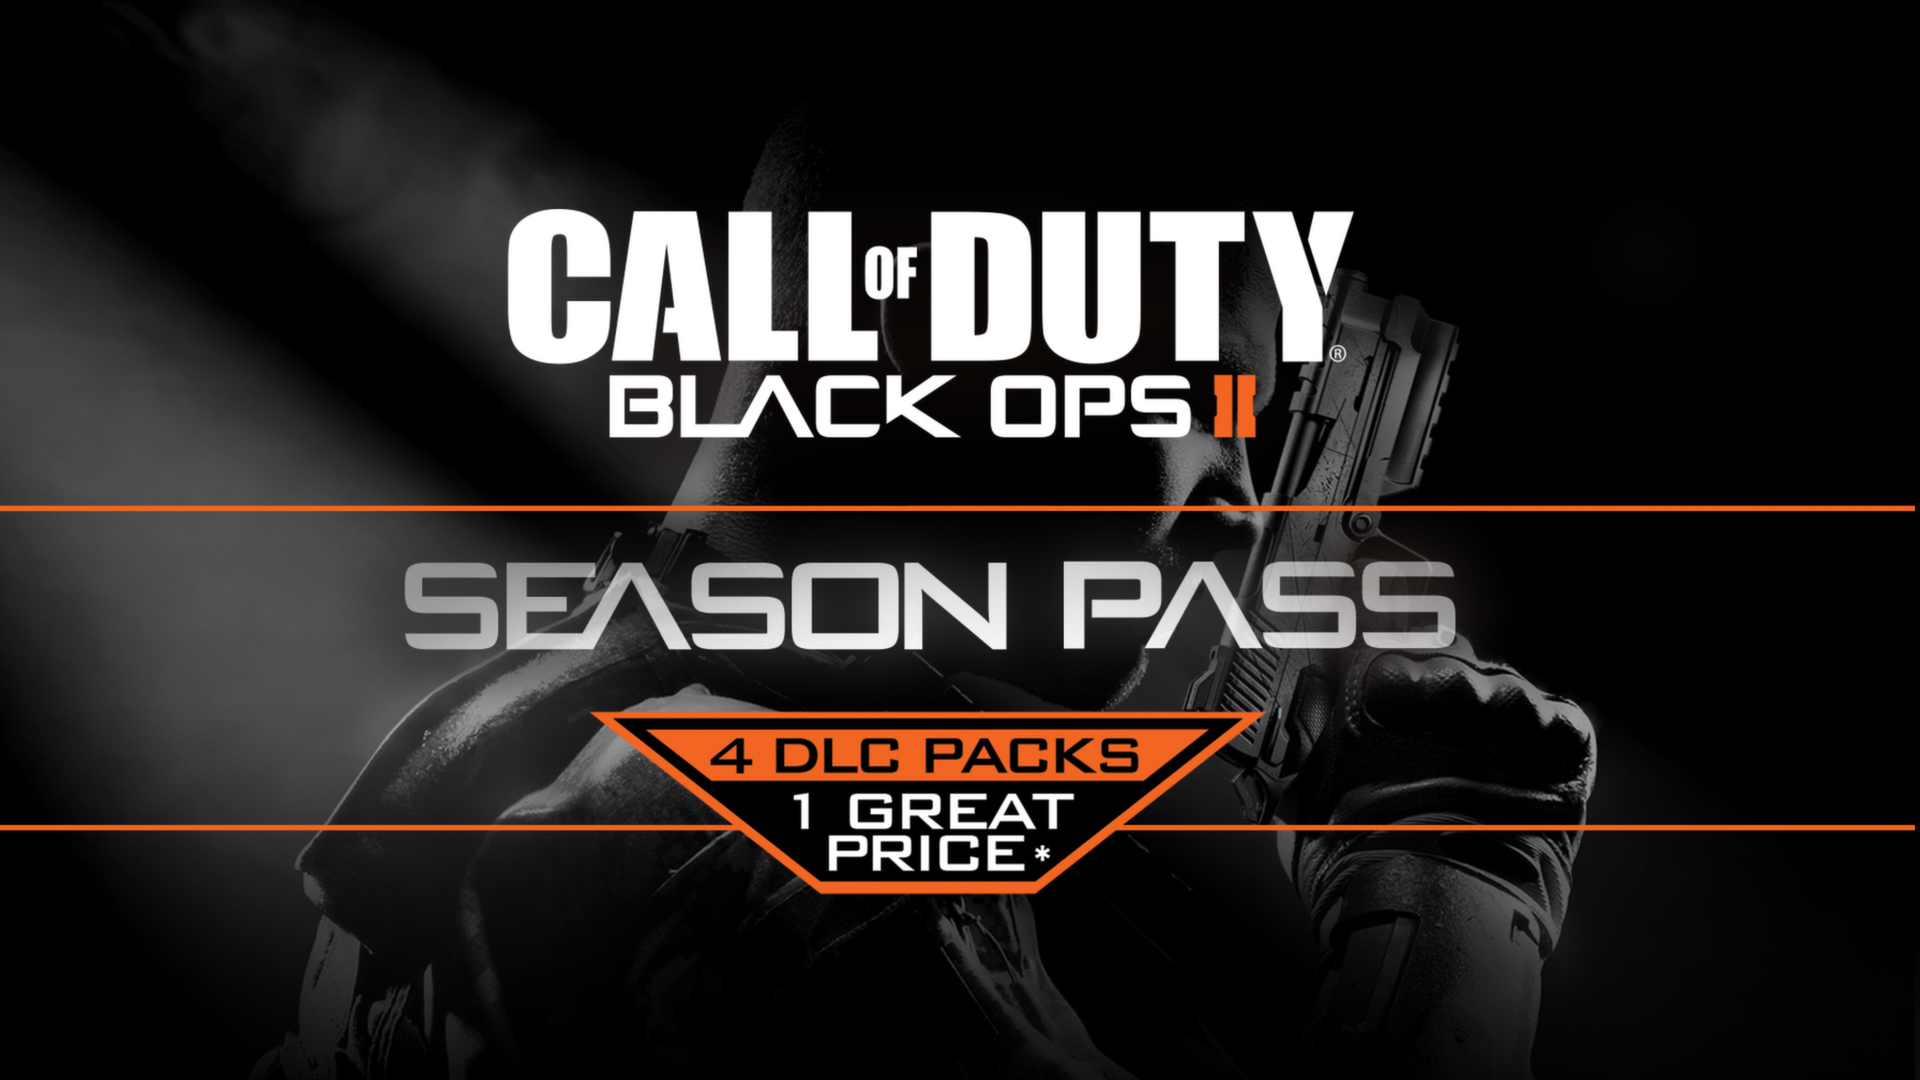 black ops 2 season pass download free